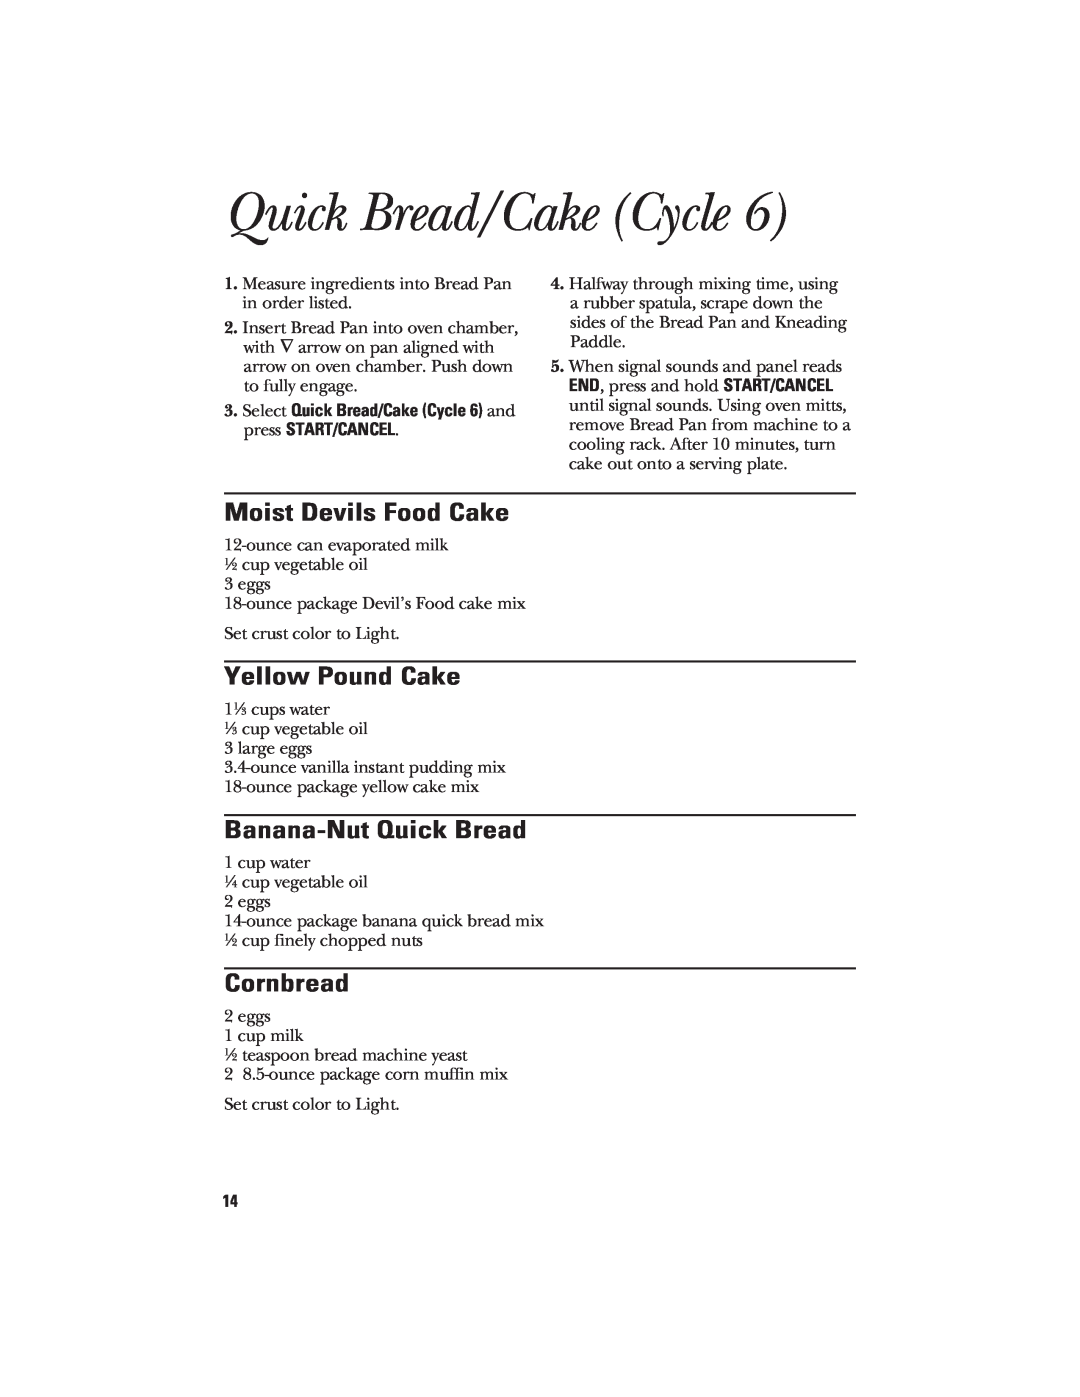 GE 840081500 Quick Bread/Cake Cycle, Moist Devils Food Cake, Yellow Pound Cake, Banana-Nut Quick Bread, Cornbread 